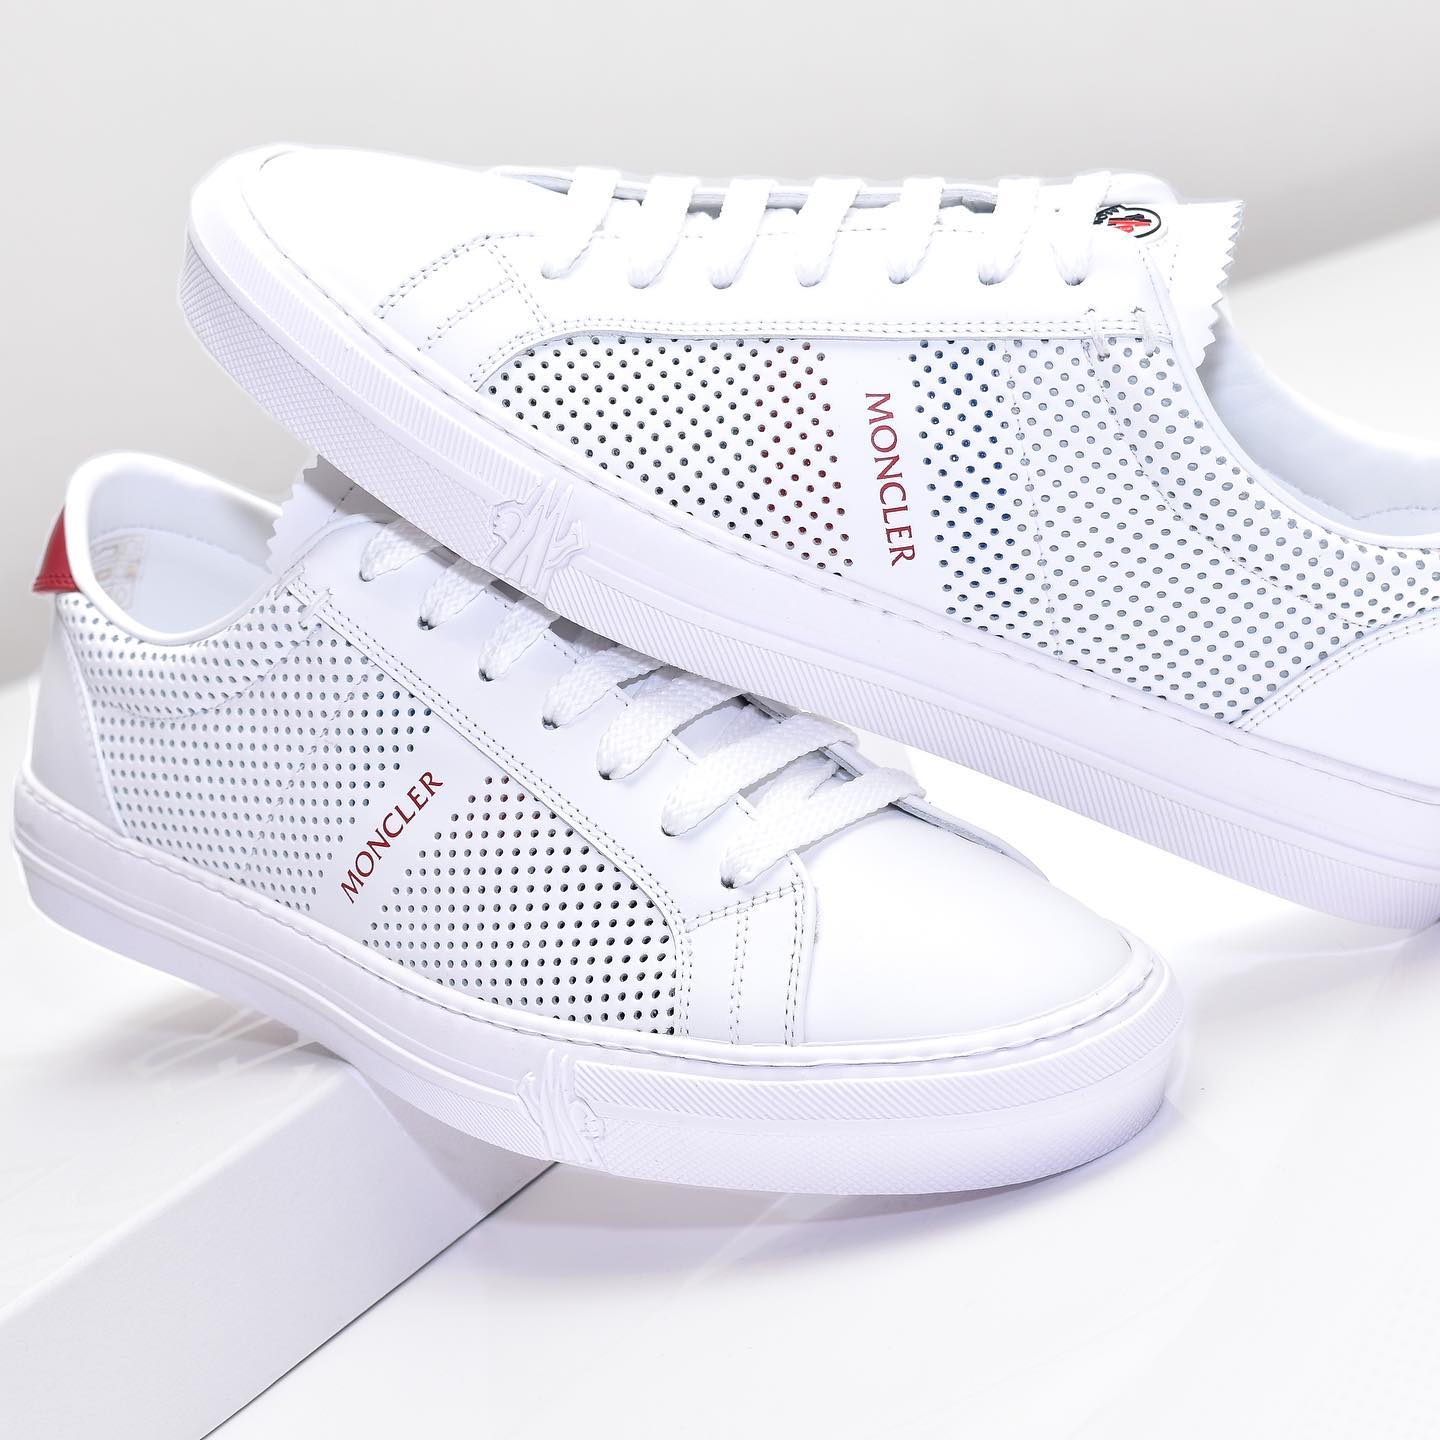 SNEAKER Moncler Monaco sneakers now available online.V ẤDFASDSDF.jpg